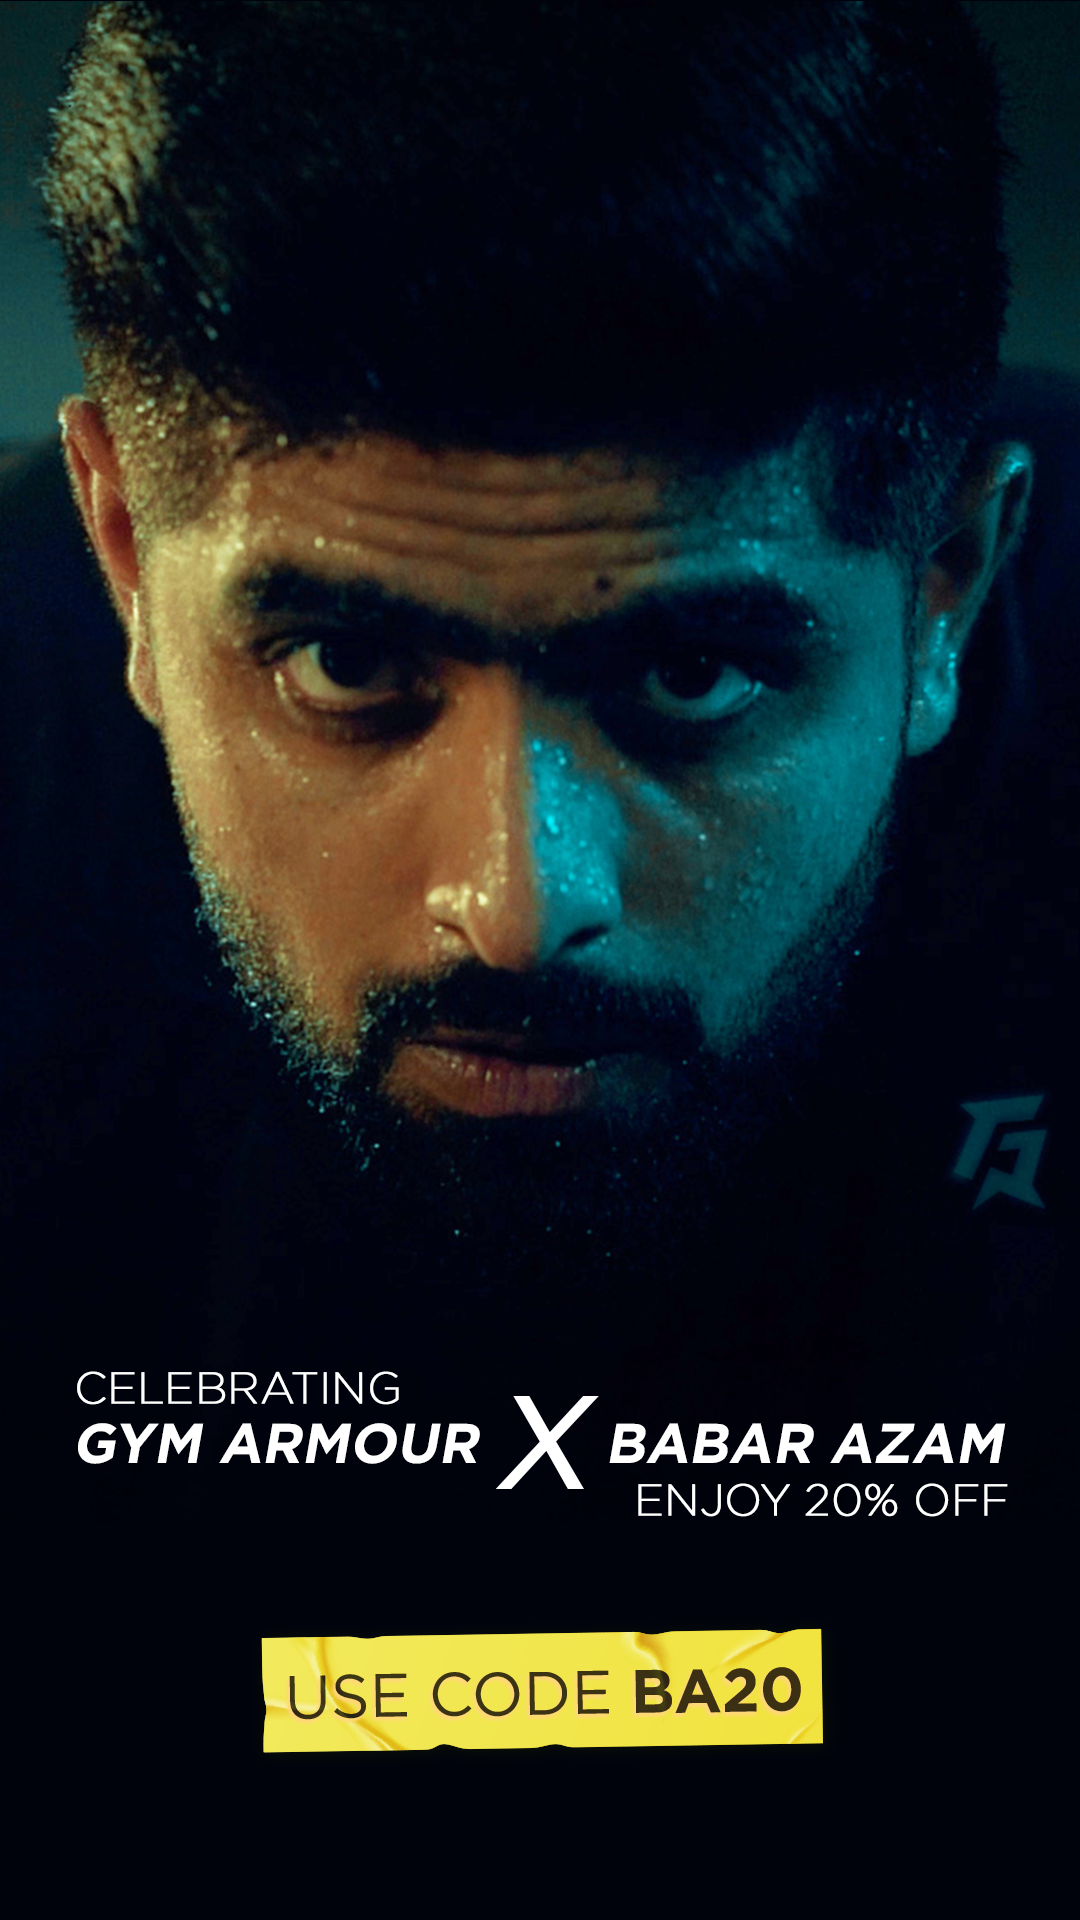 Babar Azam - Gym Armour ambassador